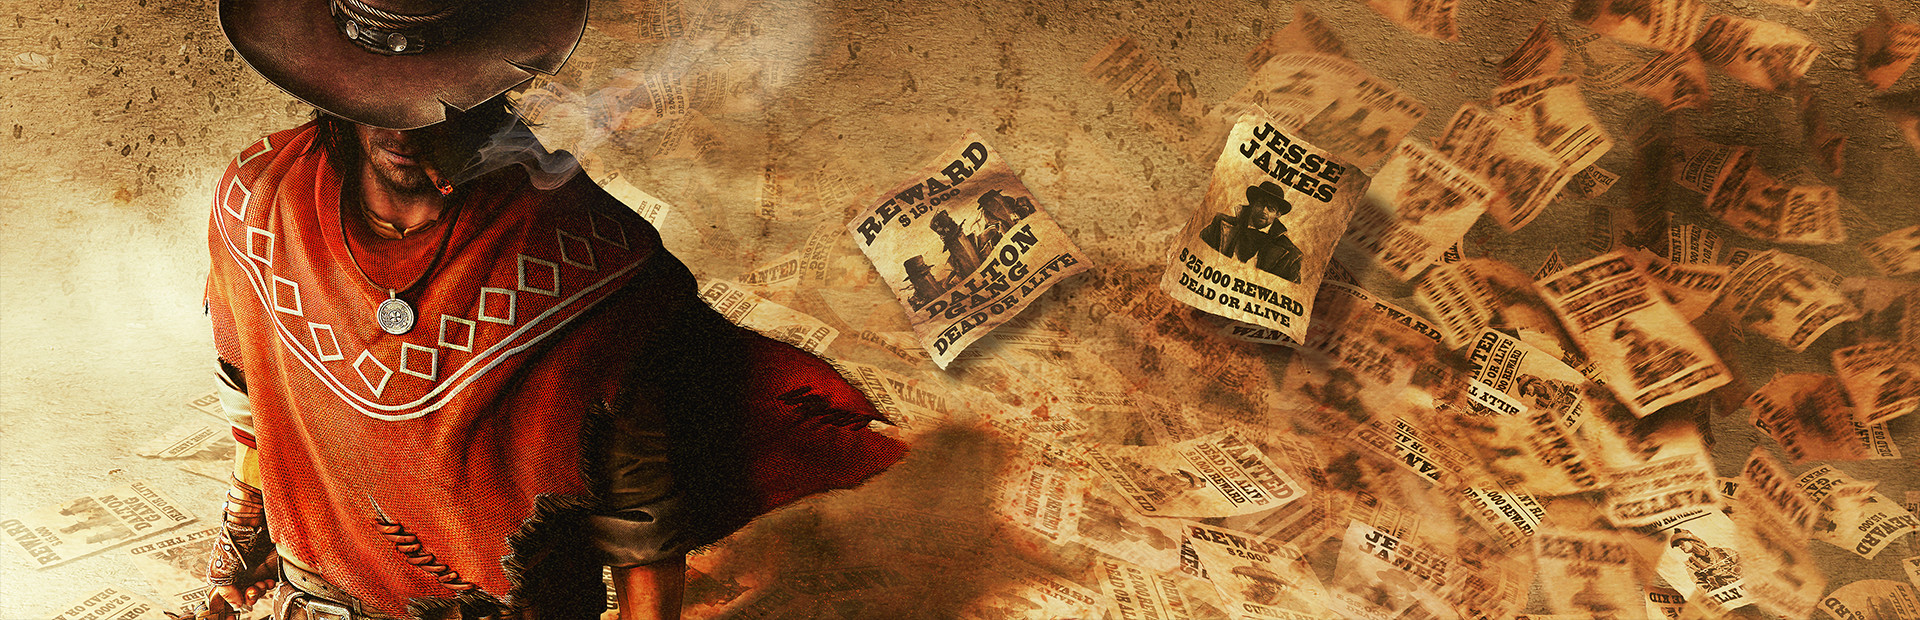 Call of Juarez: Gunslinger cover image